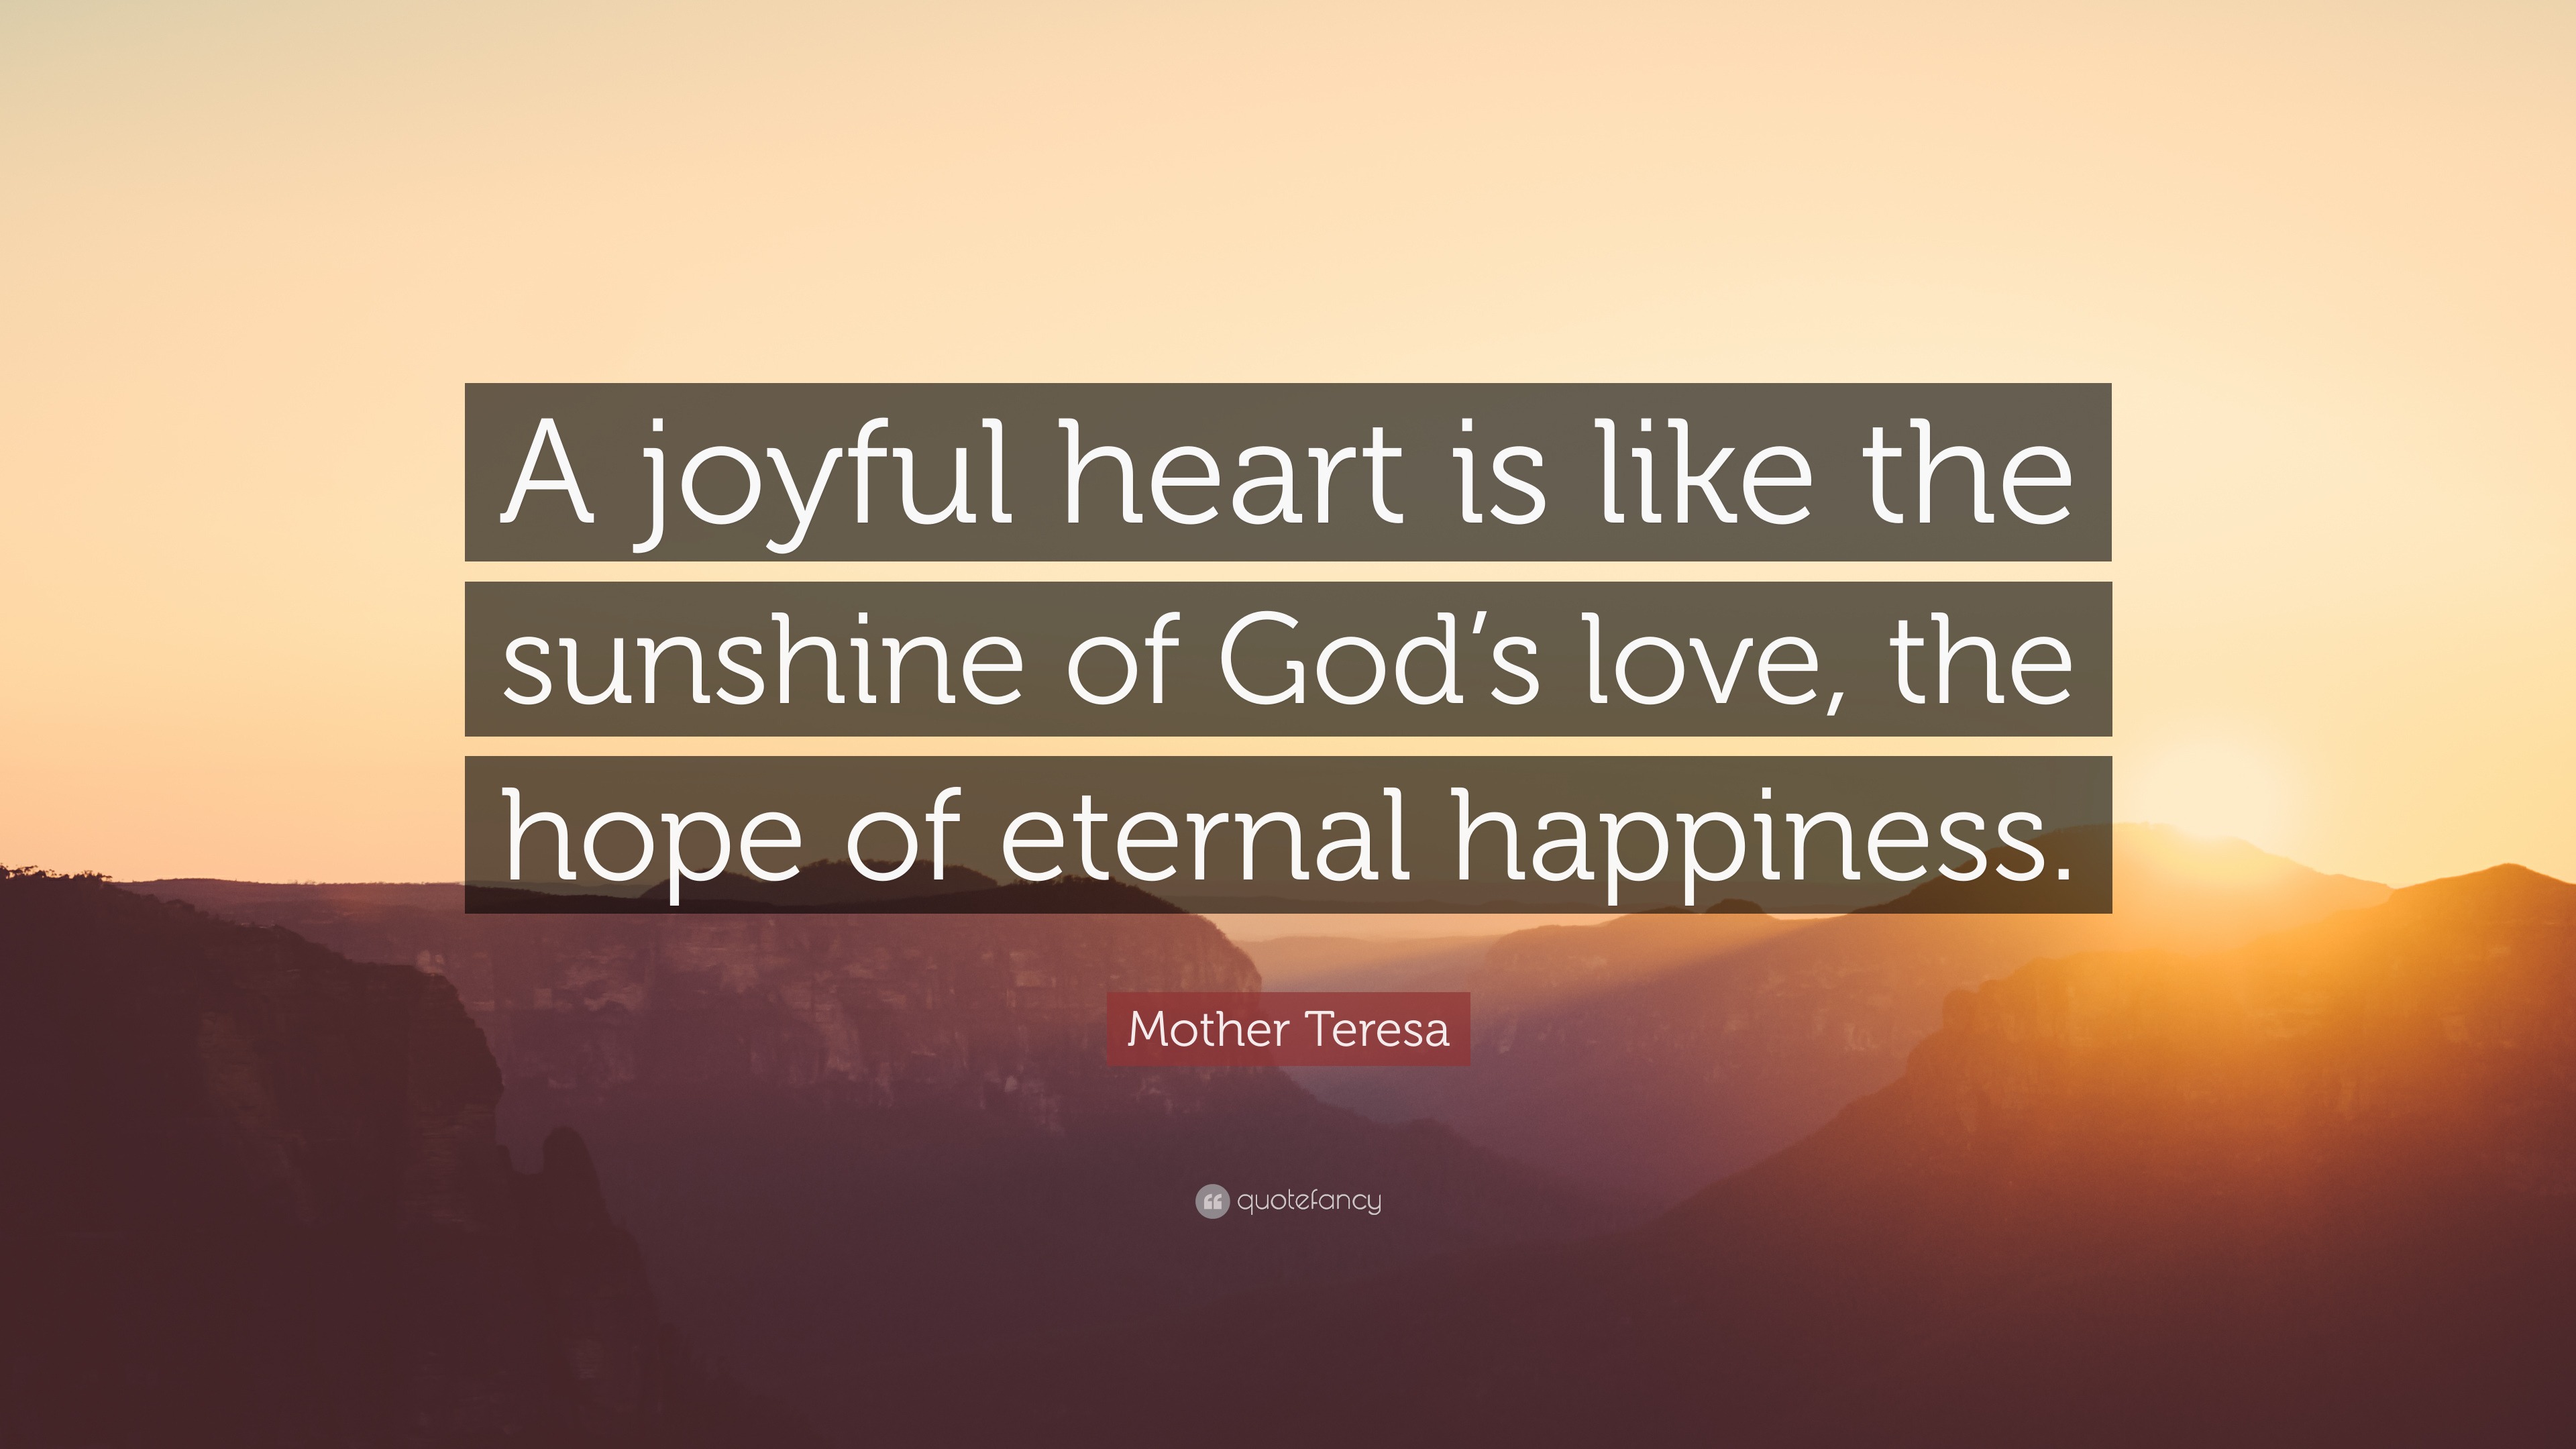 Mother Teresa Quote “A joyful heart is like the sunshine of God s love